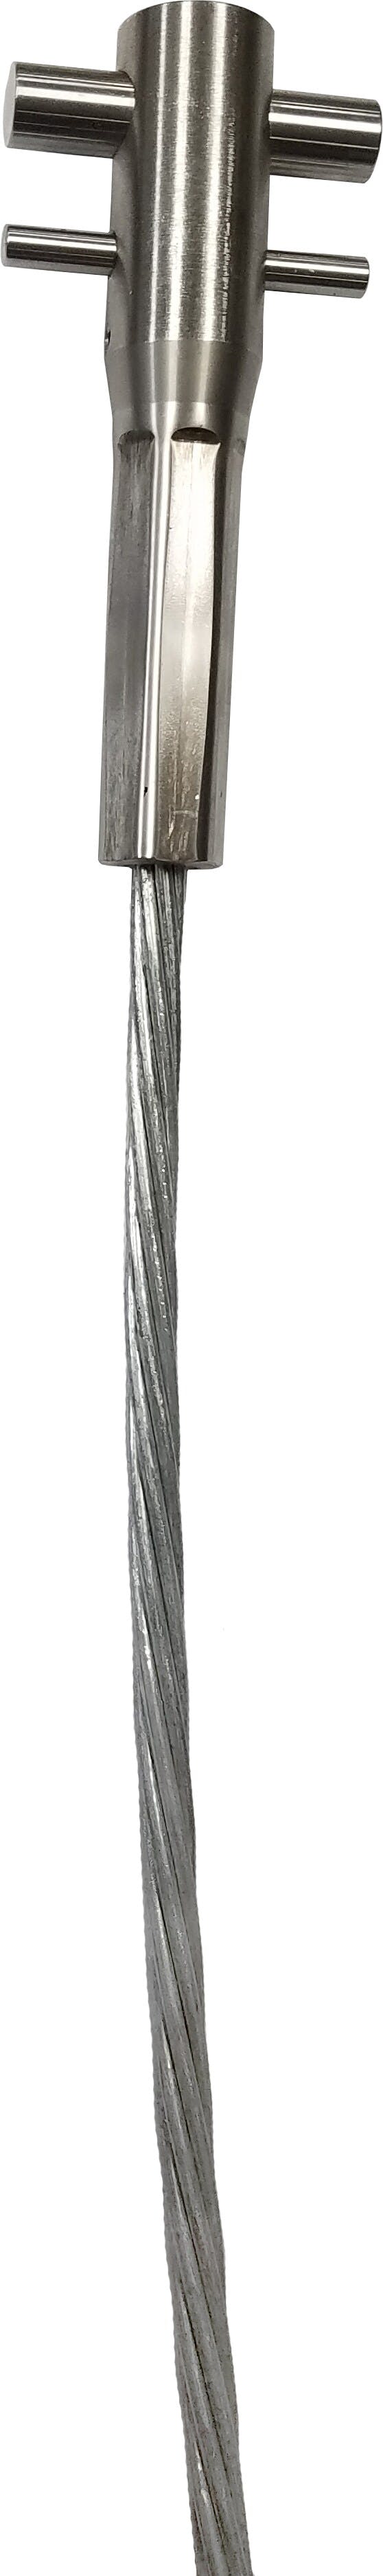 3M™ DBI-SALA® Lad-Saf™ Swaged Cable 6115003, 3/8 Inch, Galvanized Steel, 9m_0